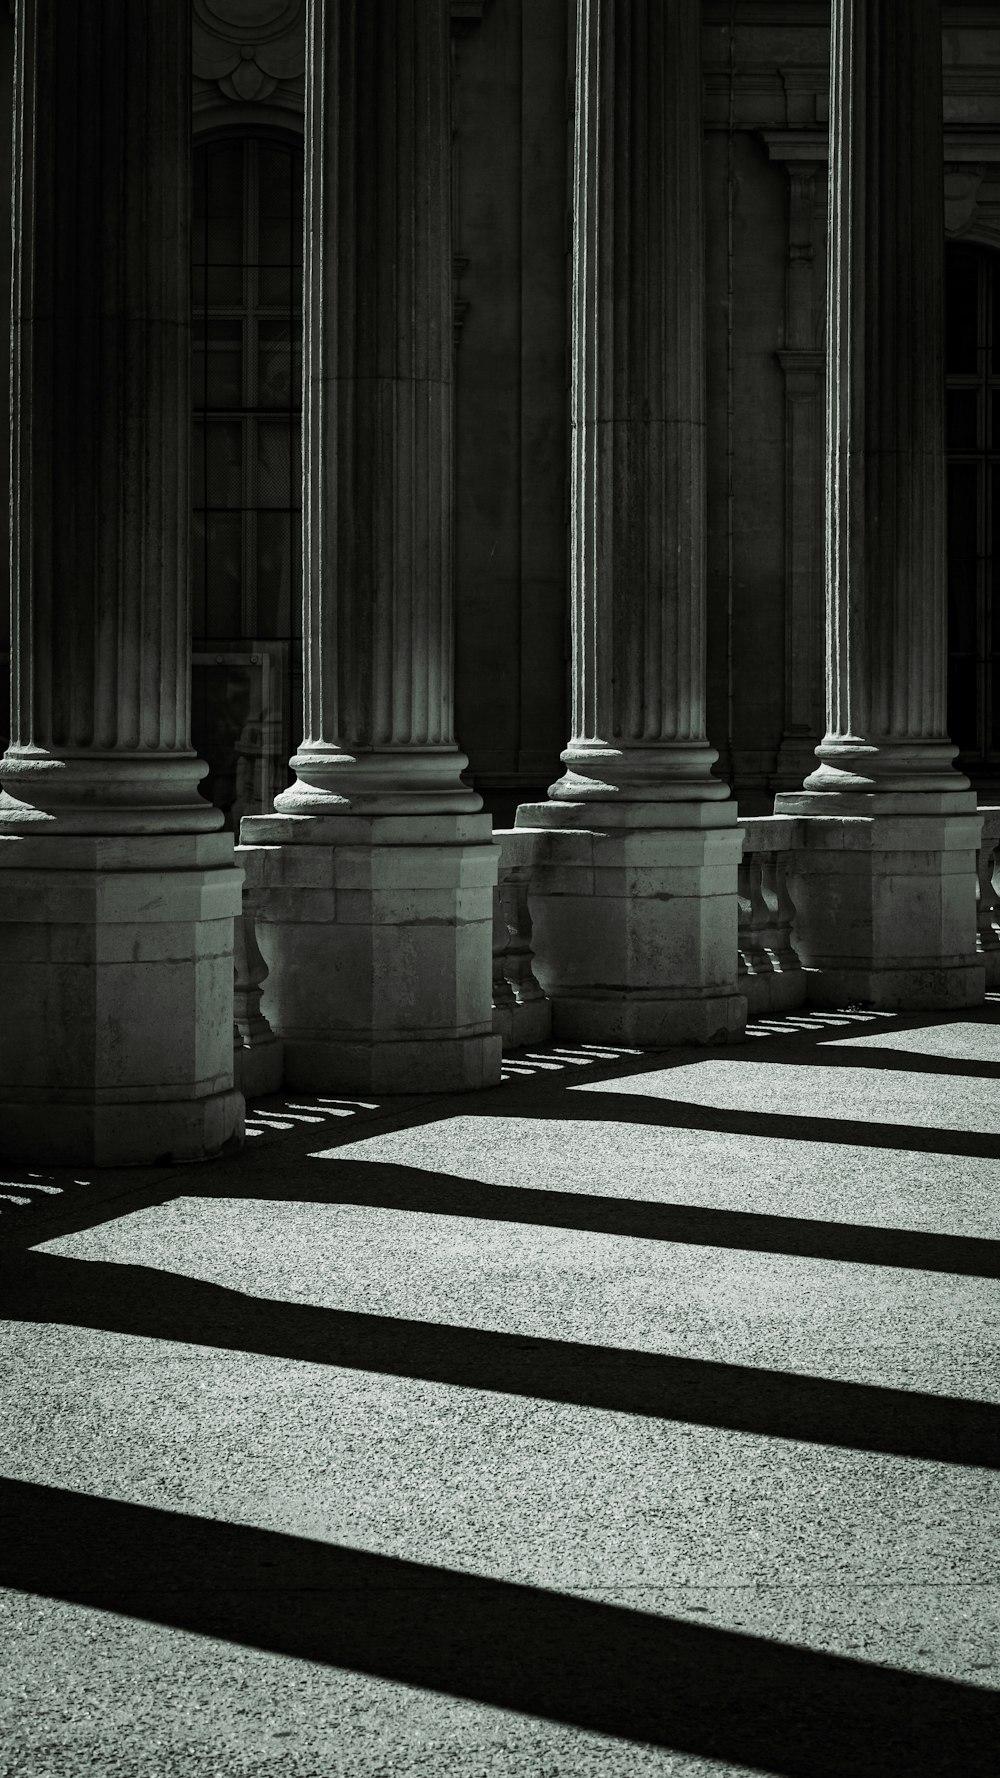 a row of pillars